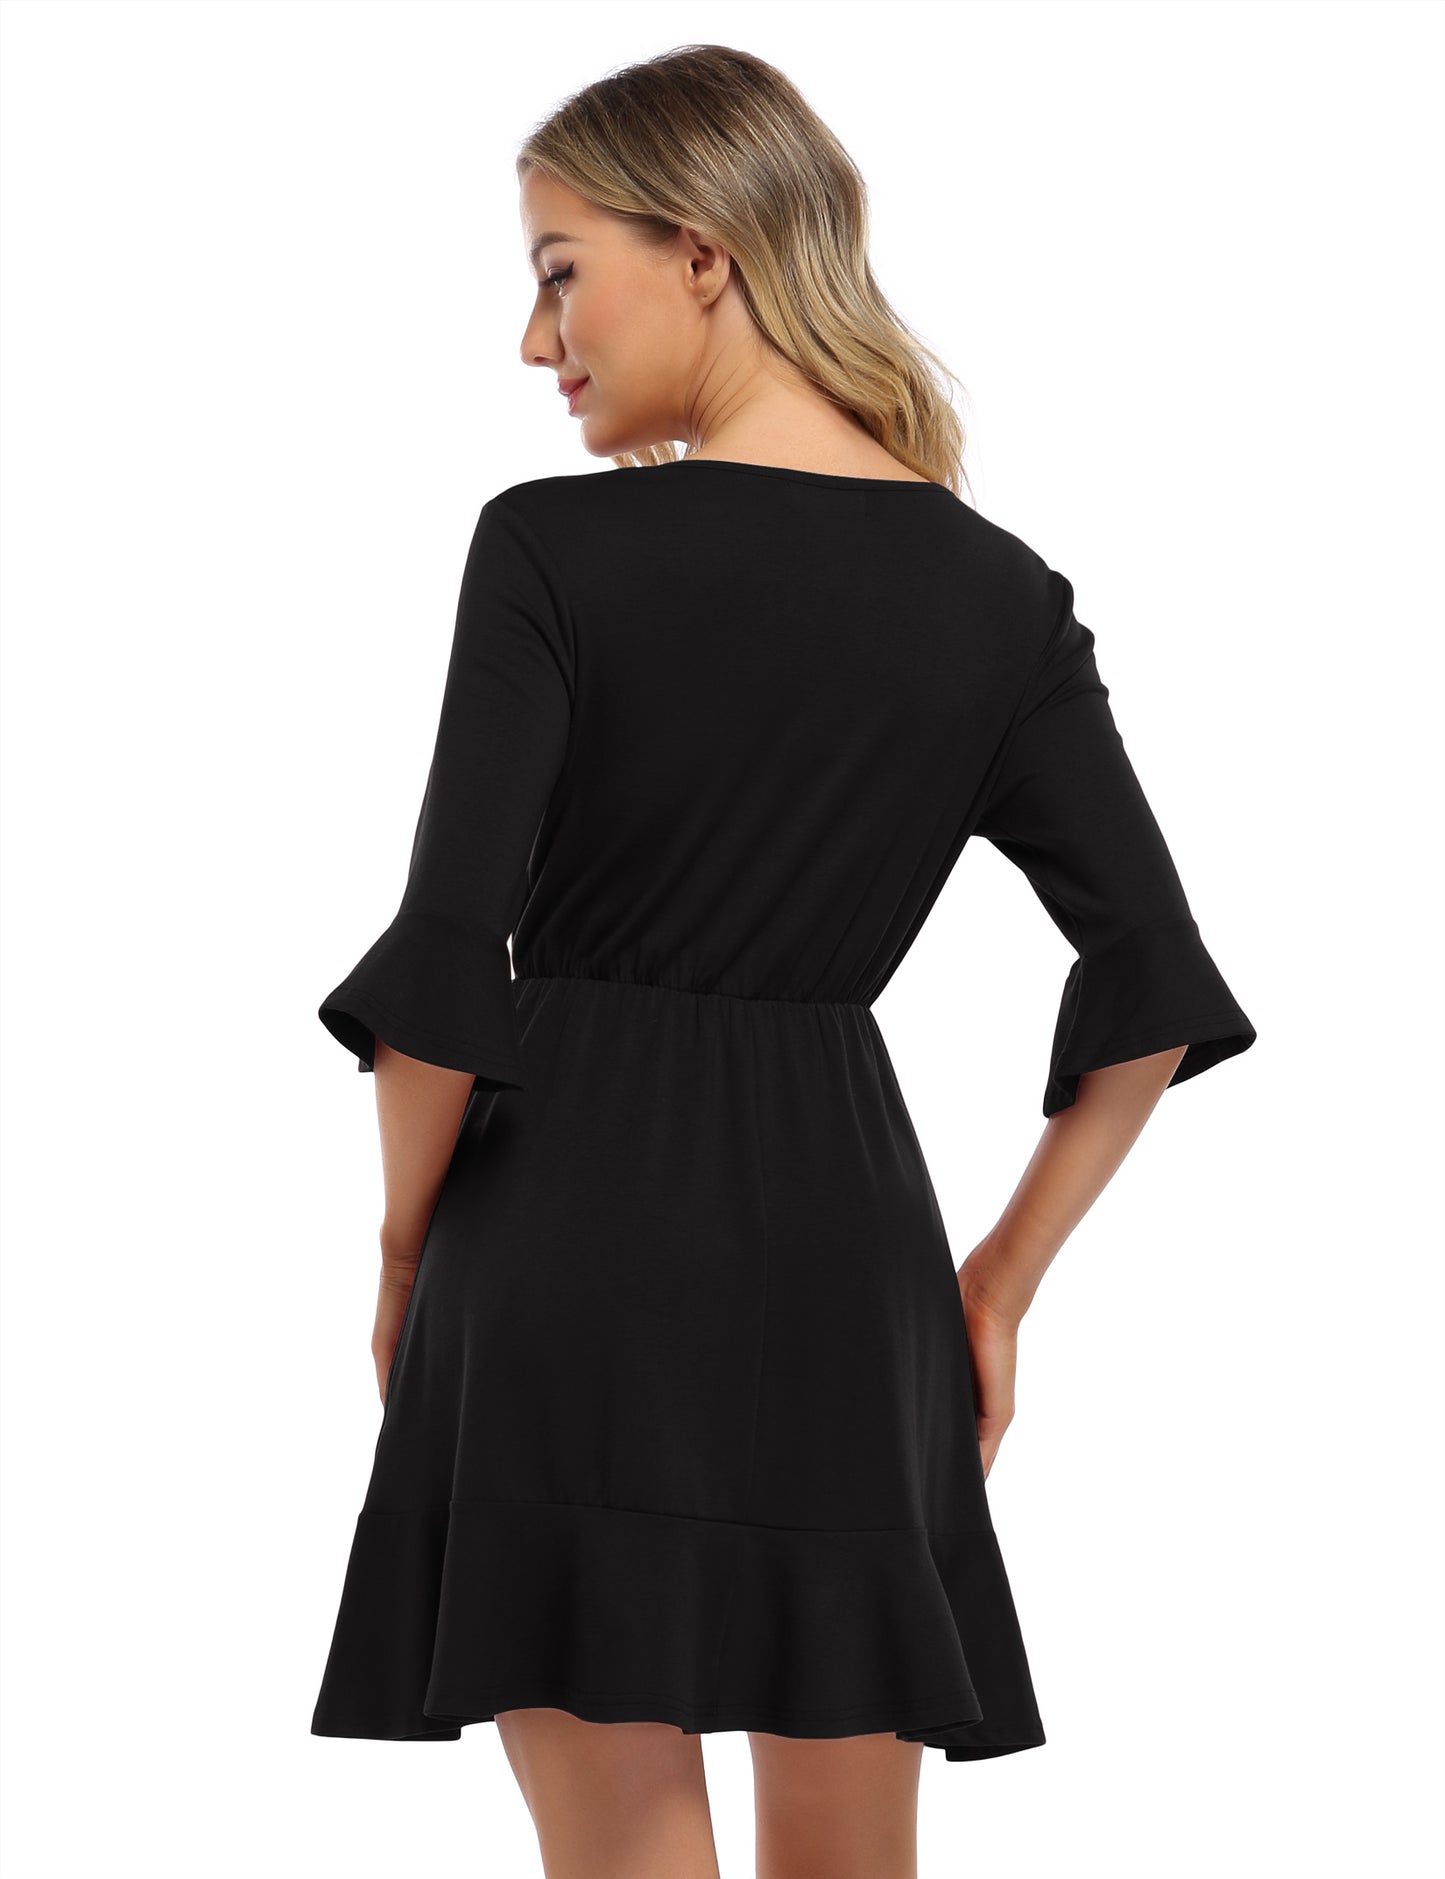 YESFASHION Women's Wrap Dress Fall 3/4 Sleeve Dresses